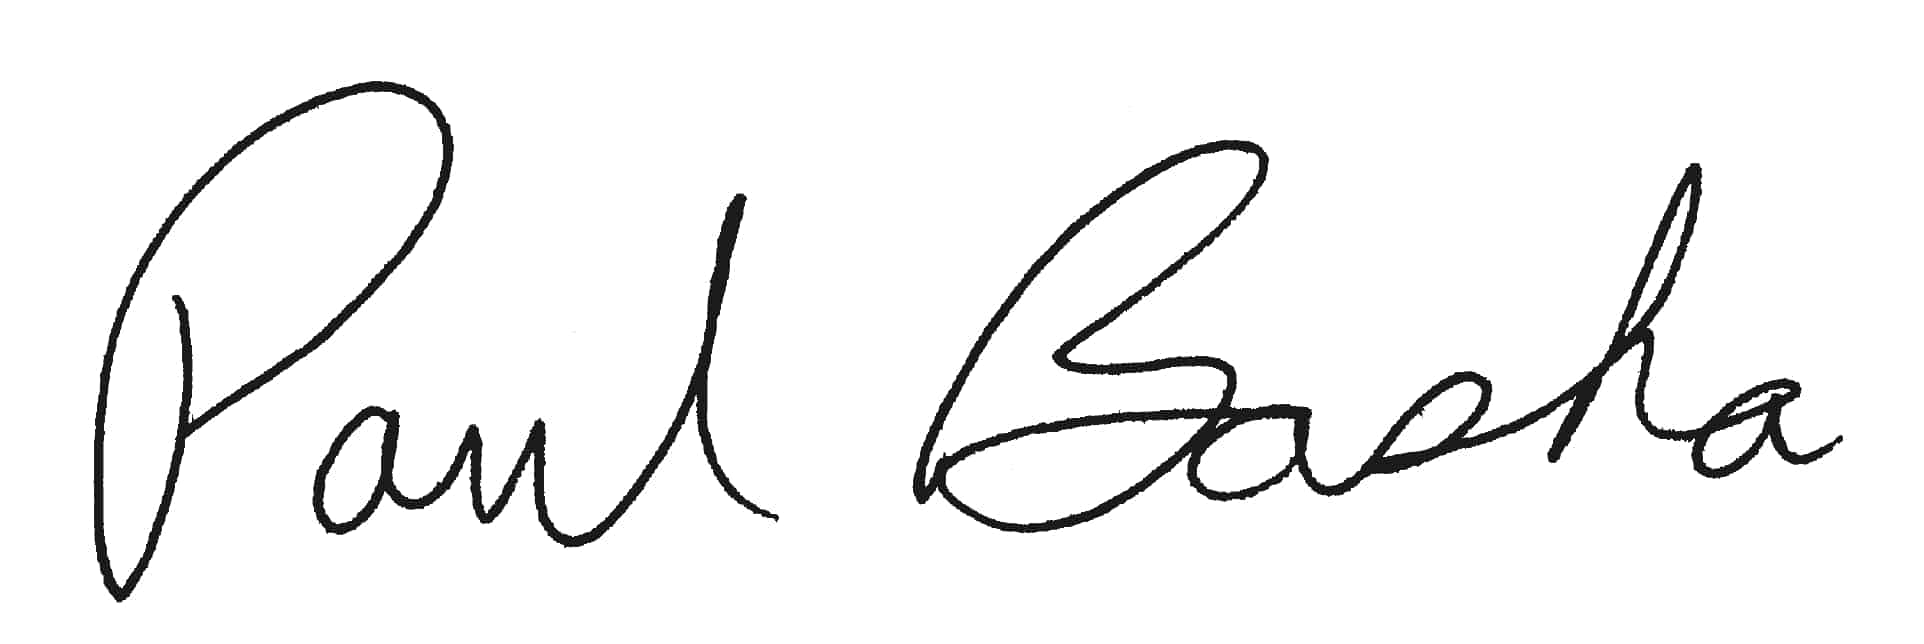 Paul Basha signature